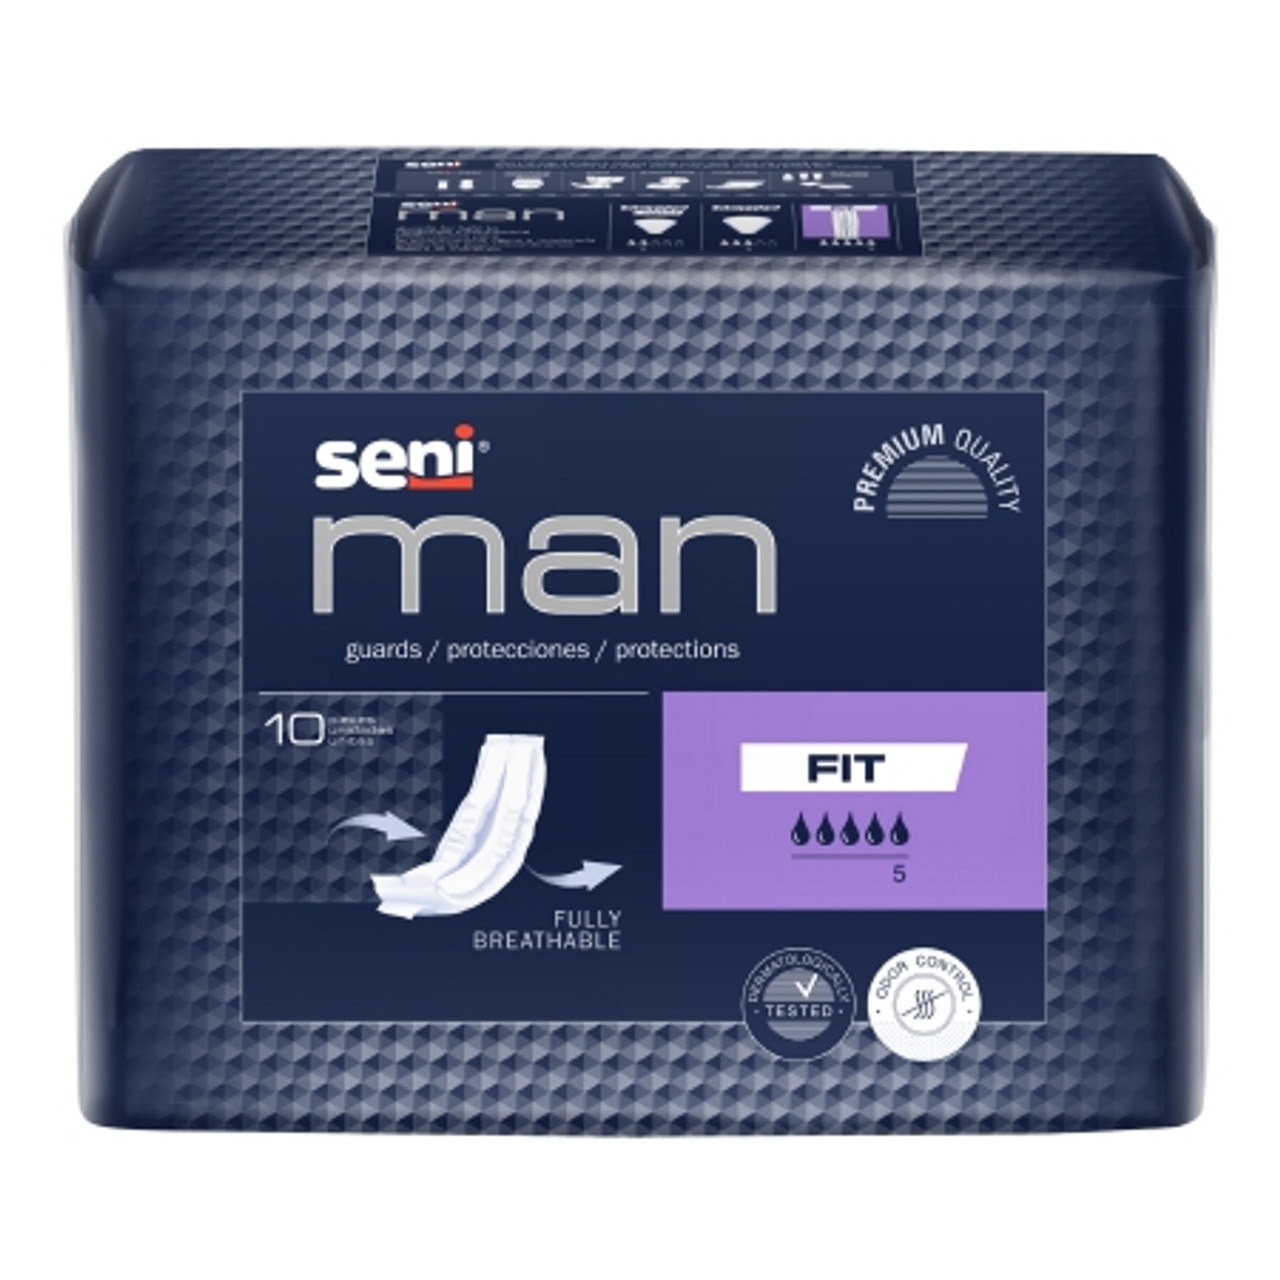 Seni Man Guard, Male Fit 10/pack